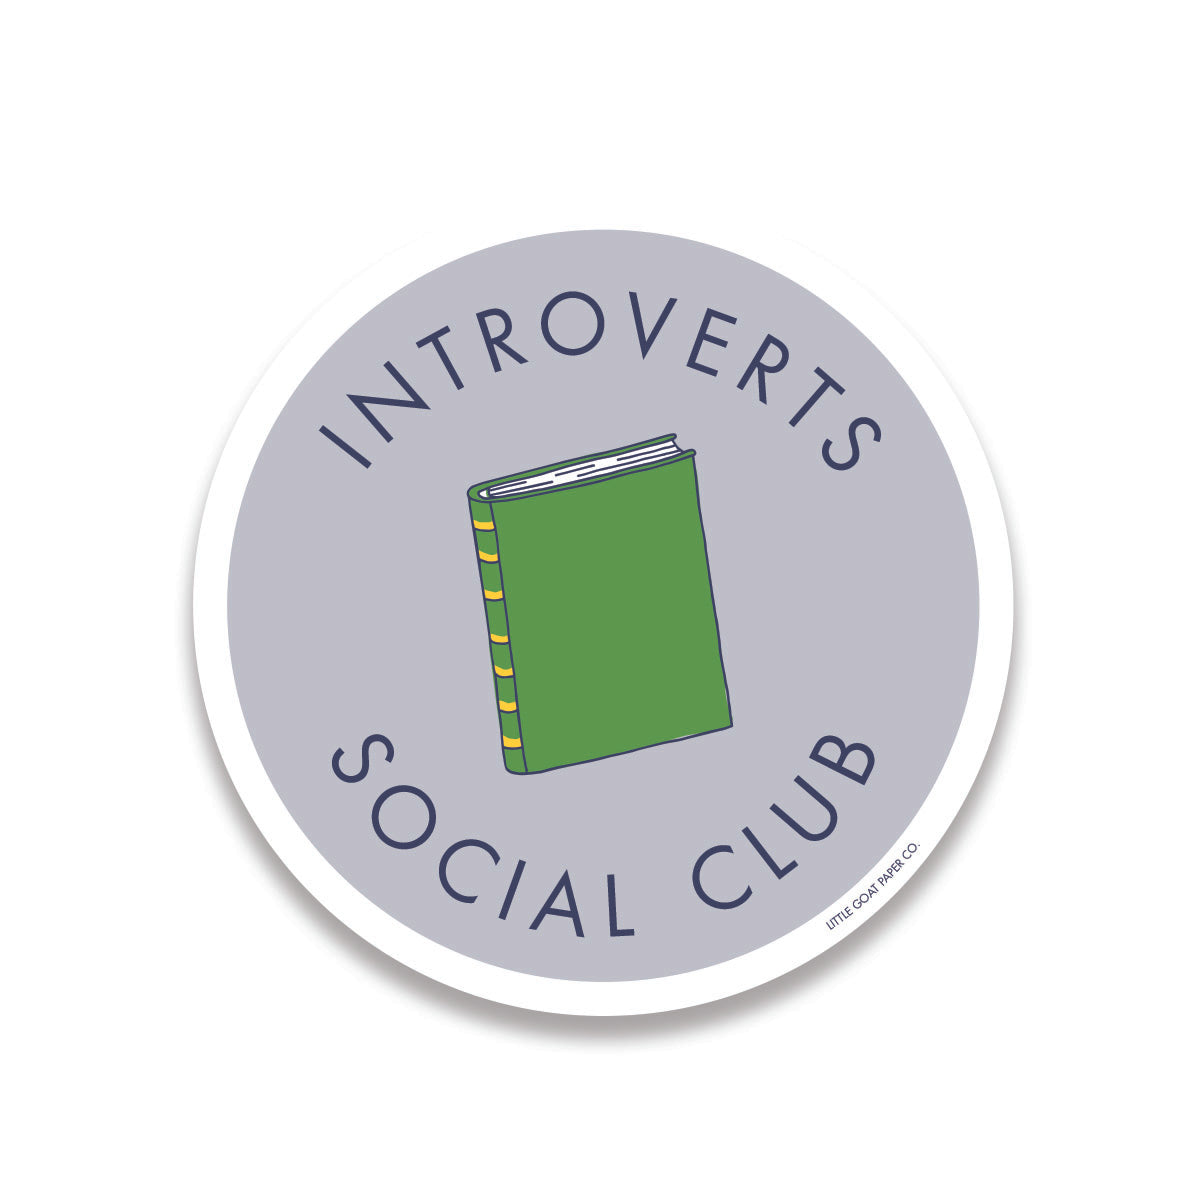 introverts social club sticker